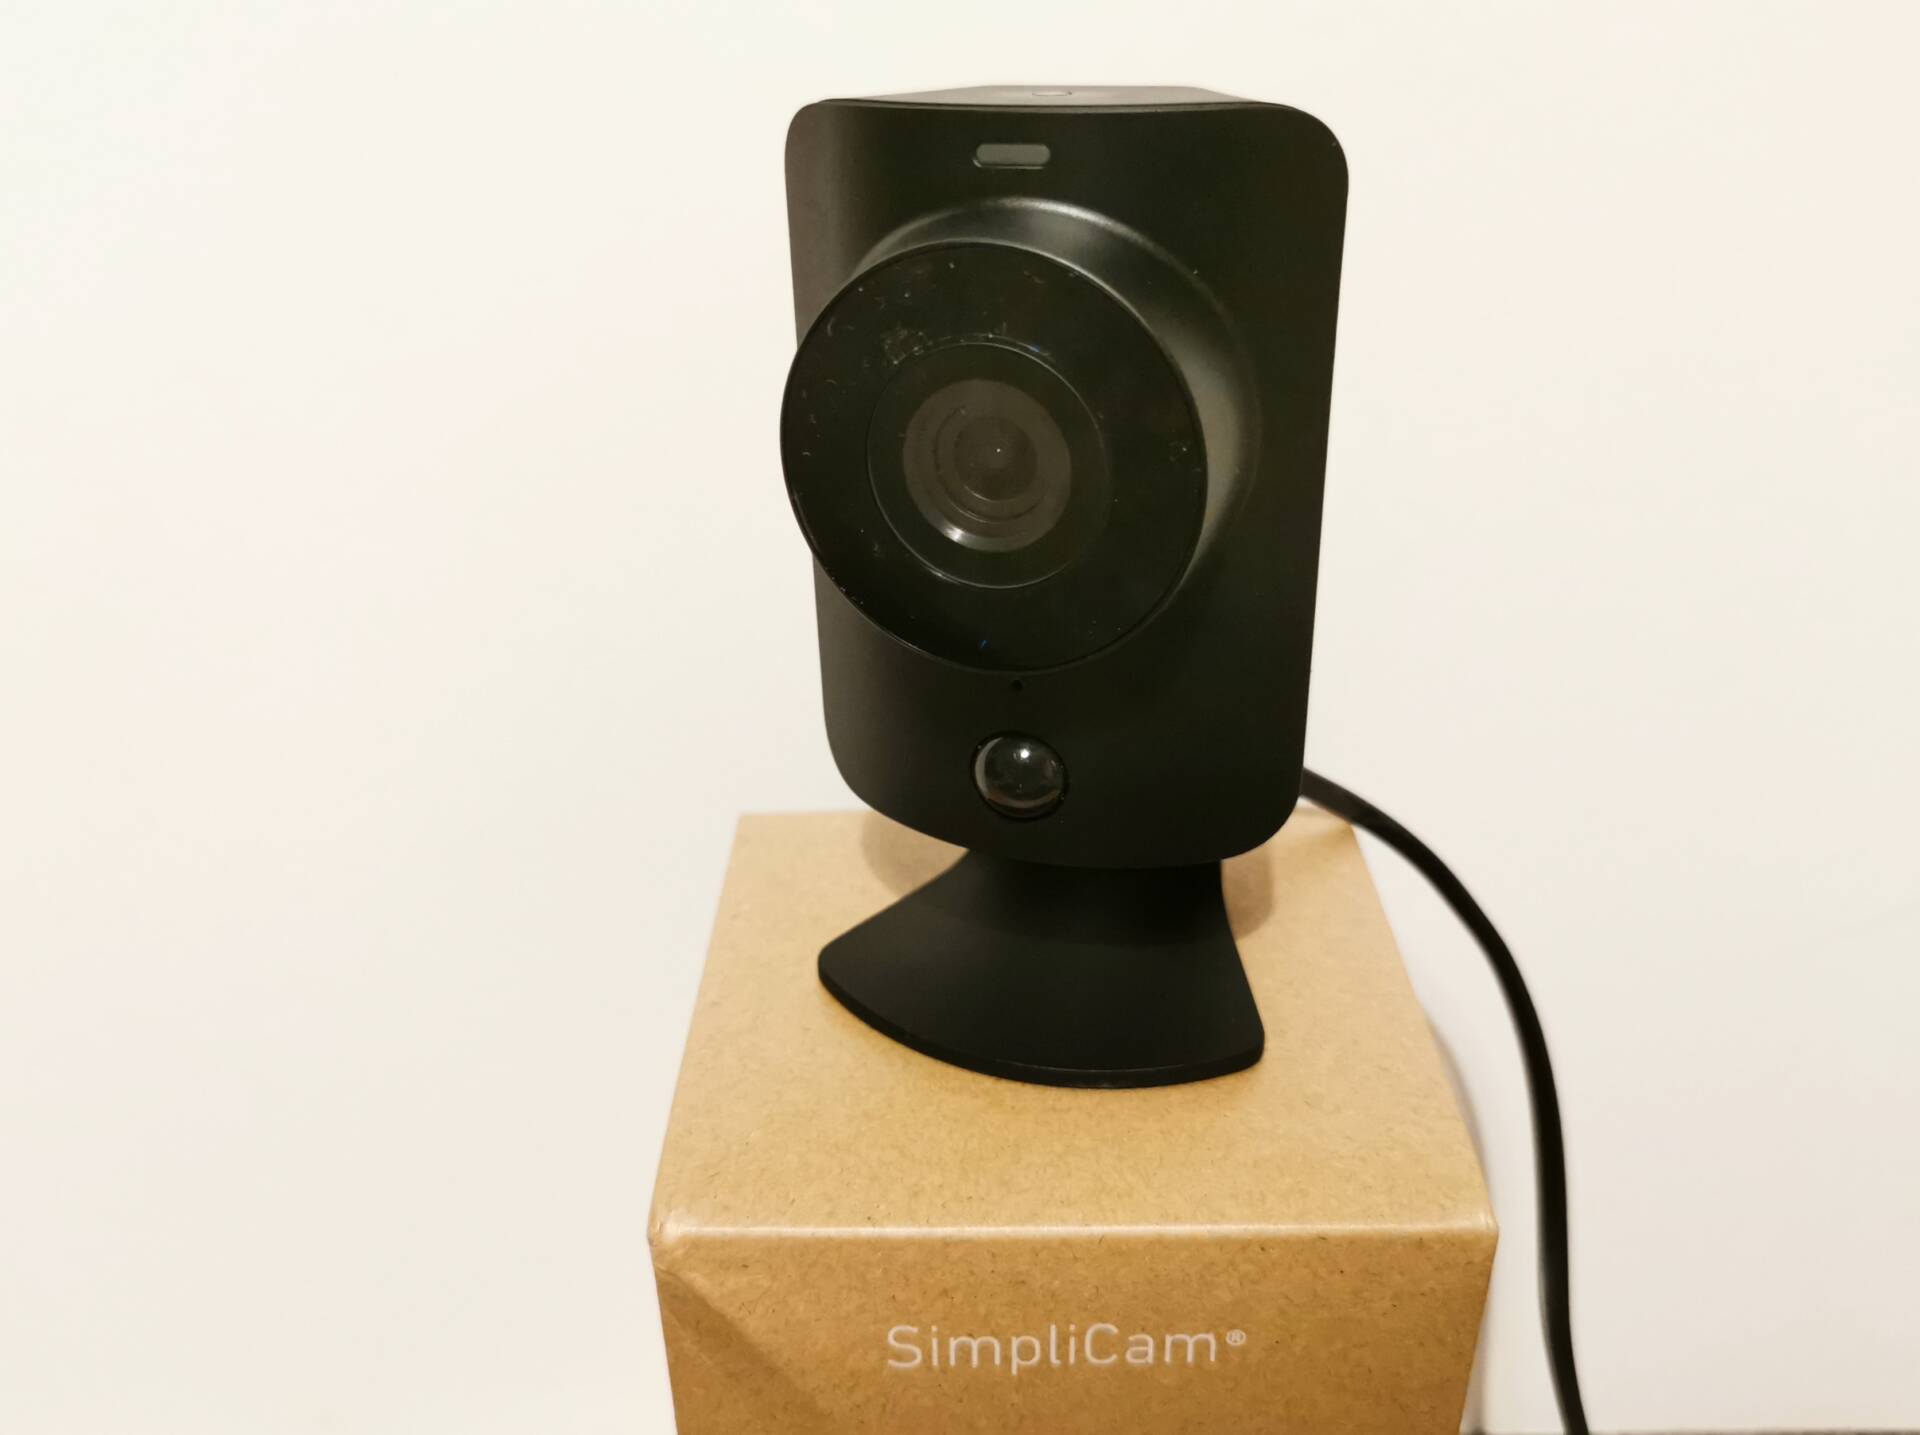 simplisafe camera not detecting motion